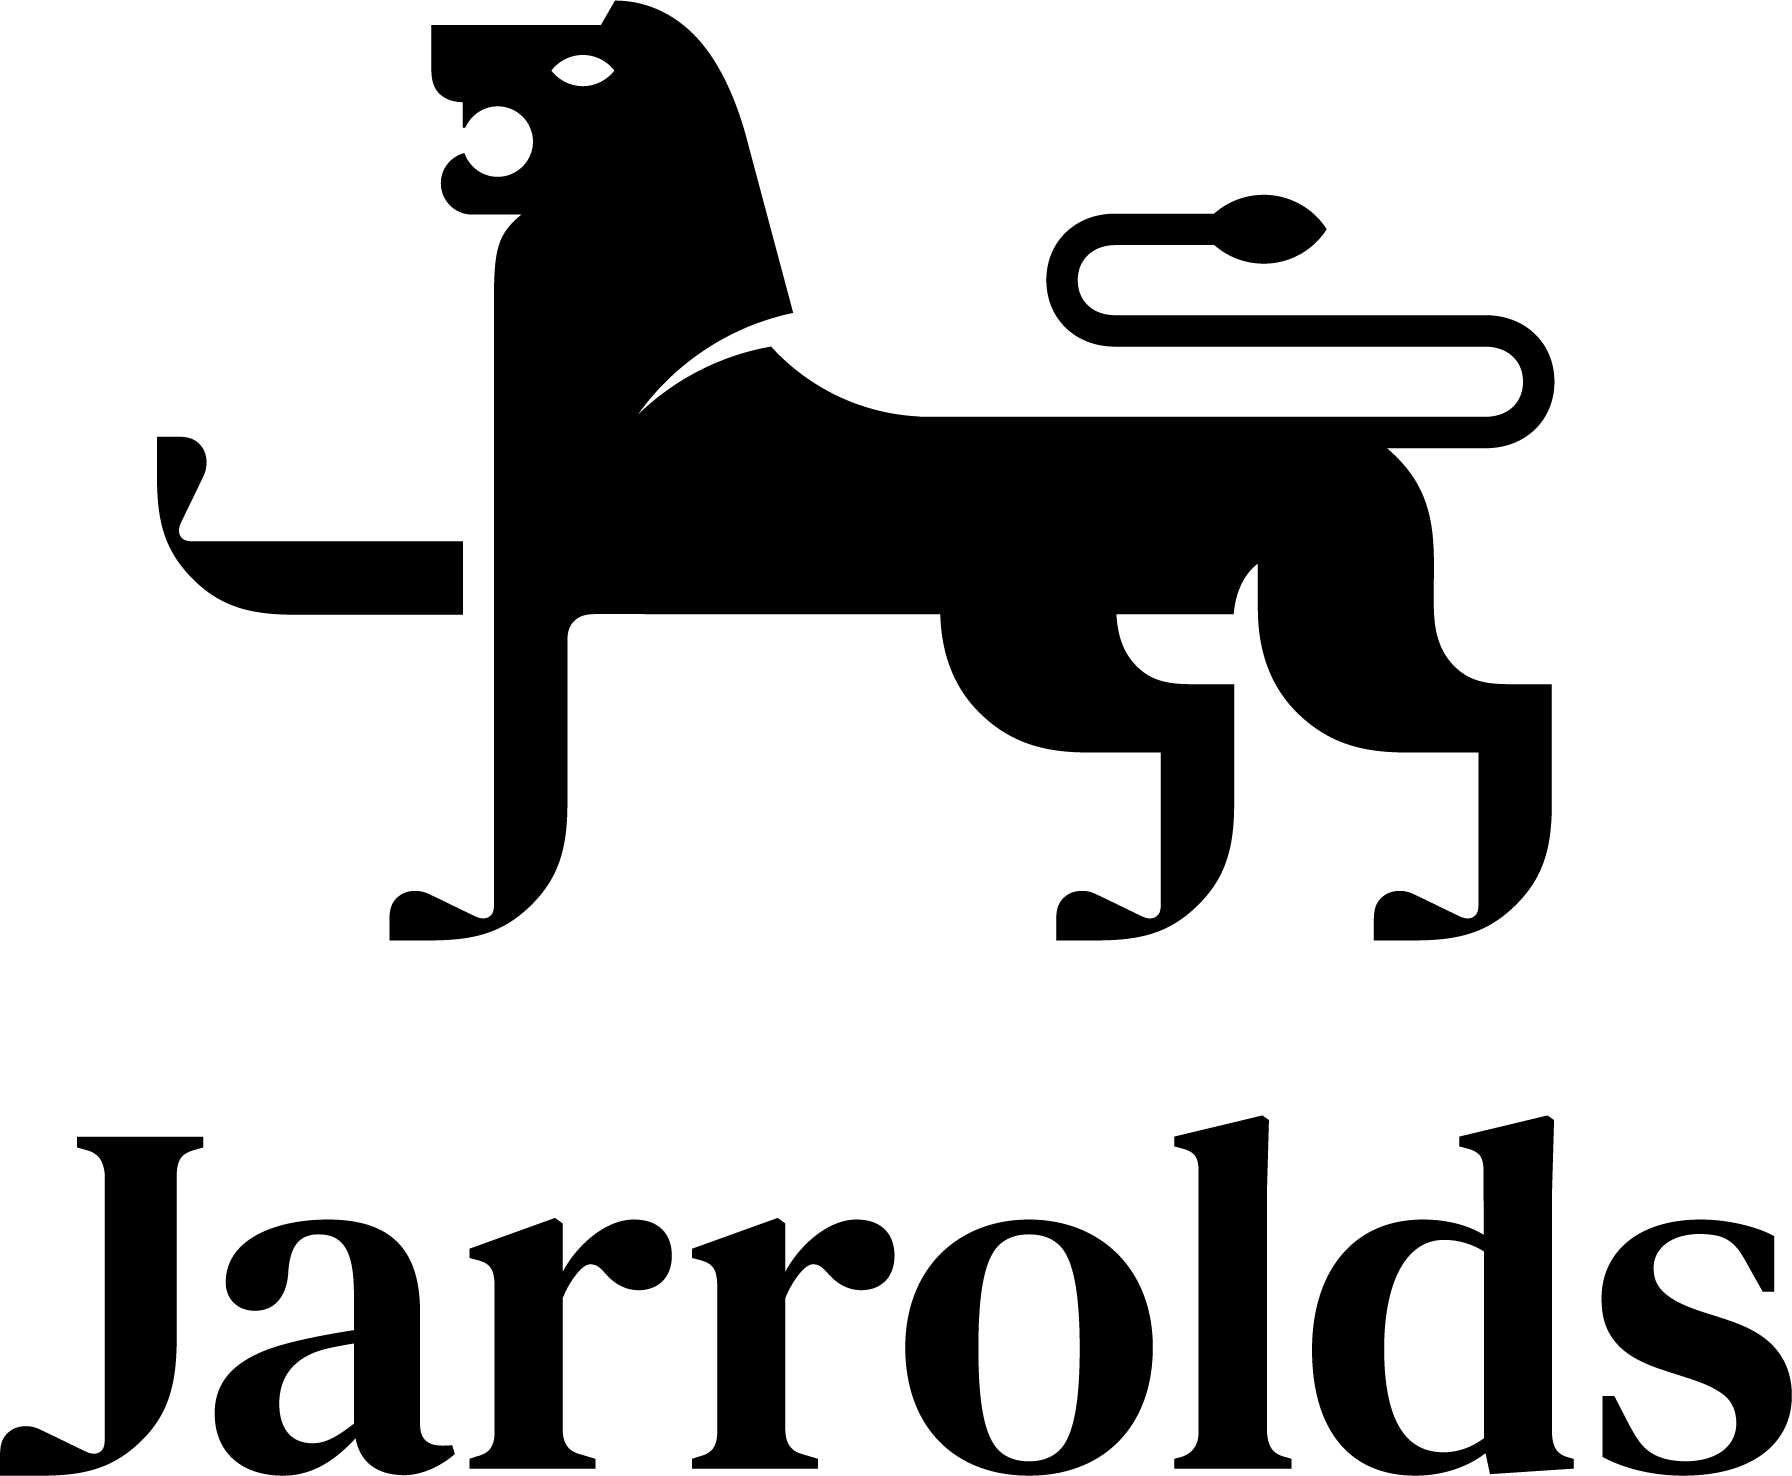 Jarrolds_Combo_Logo_RGB_Black_AW